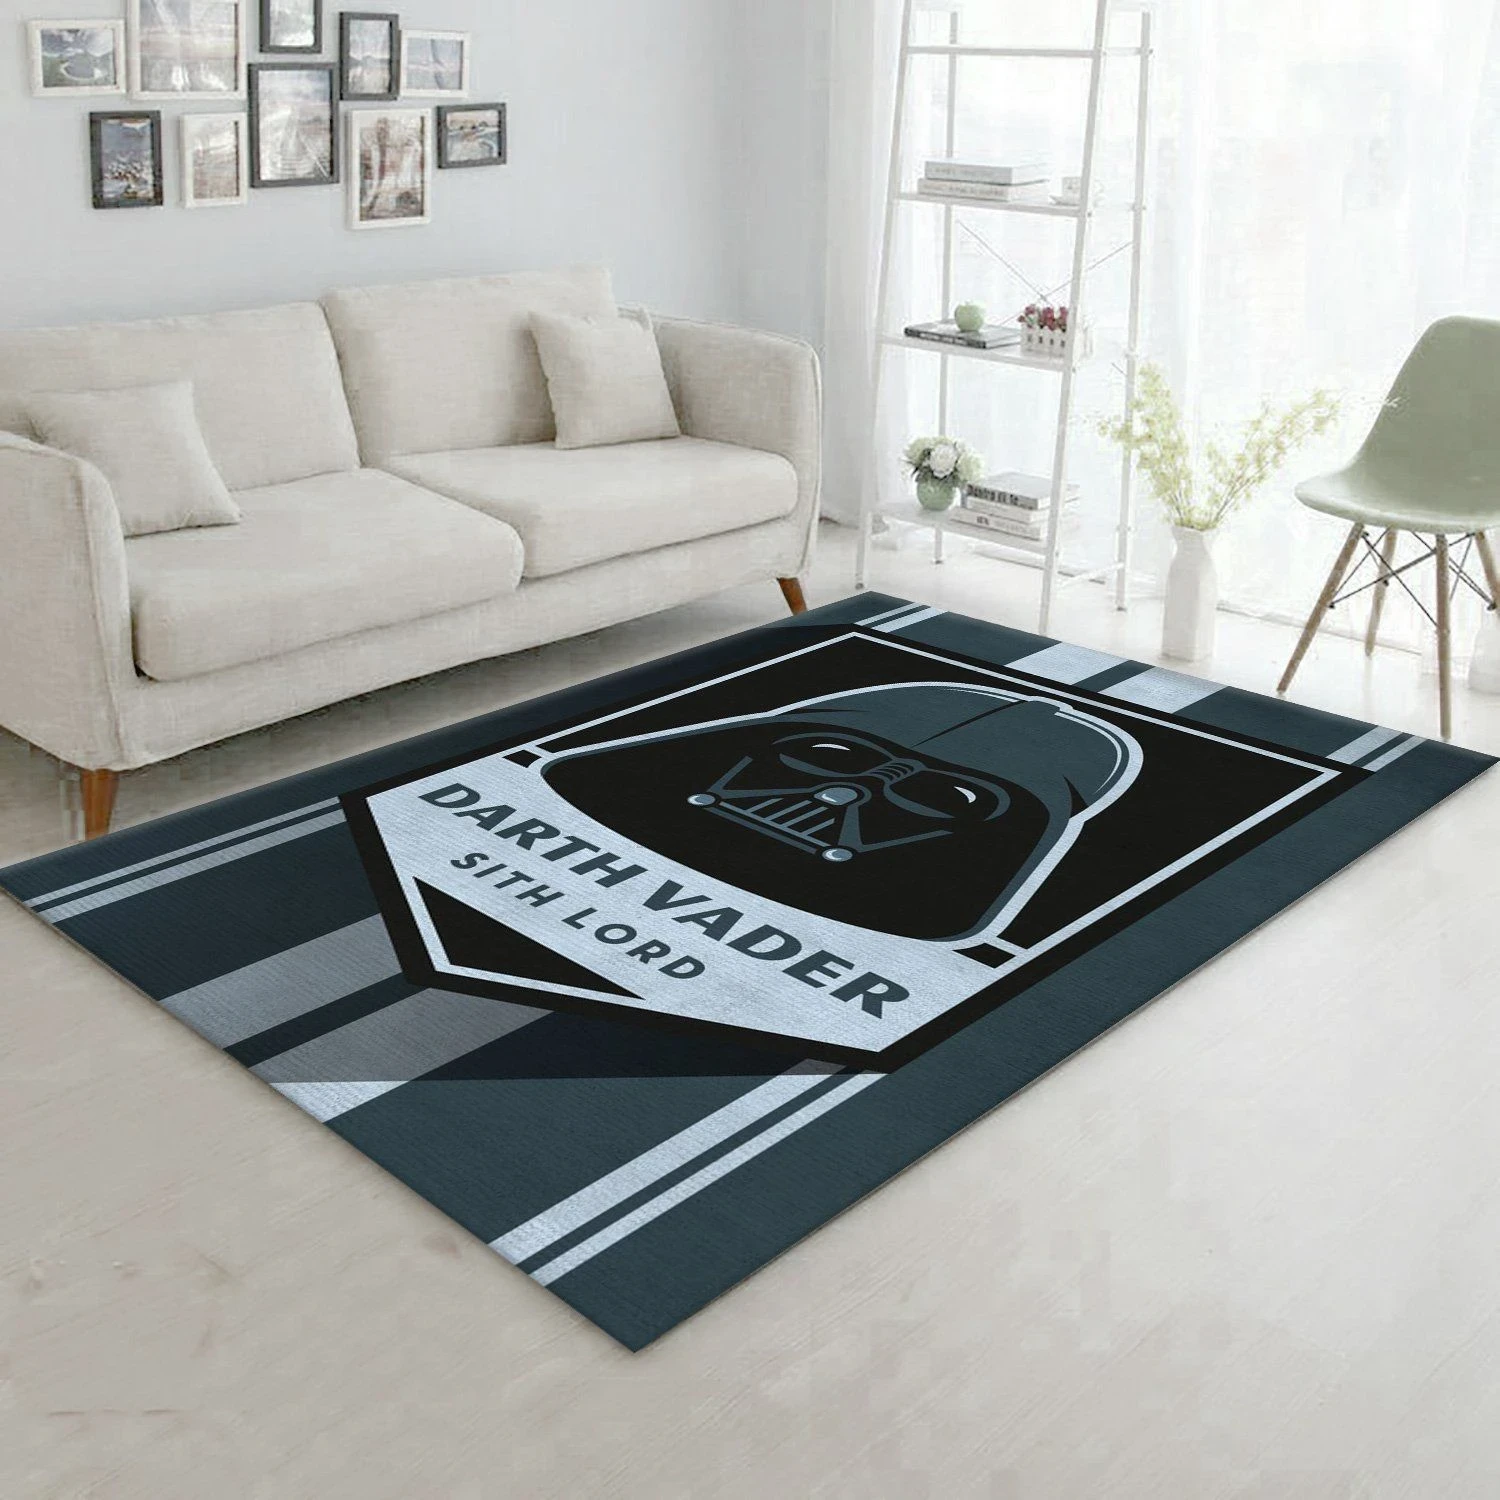 Darth Vader Rug Star Wars Badges Arts Rug Home Decor Floor Decor - Indoor Outdoor Rugs 2